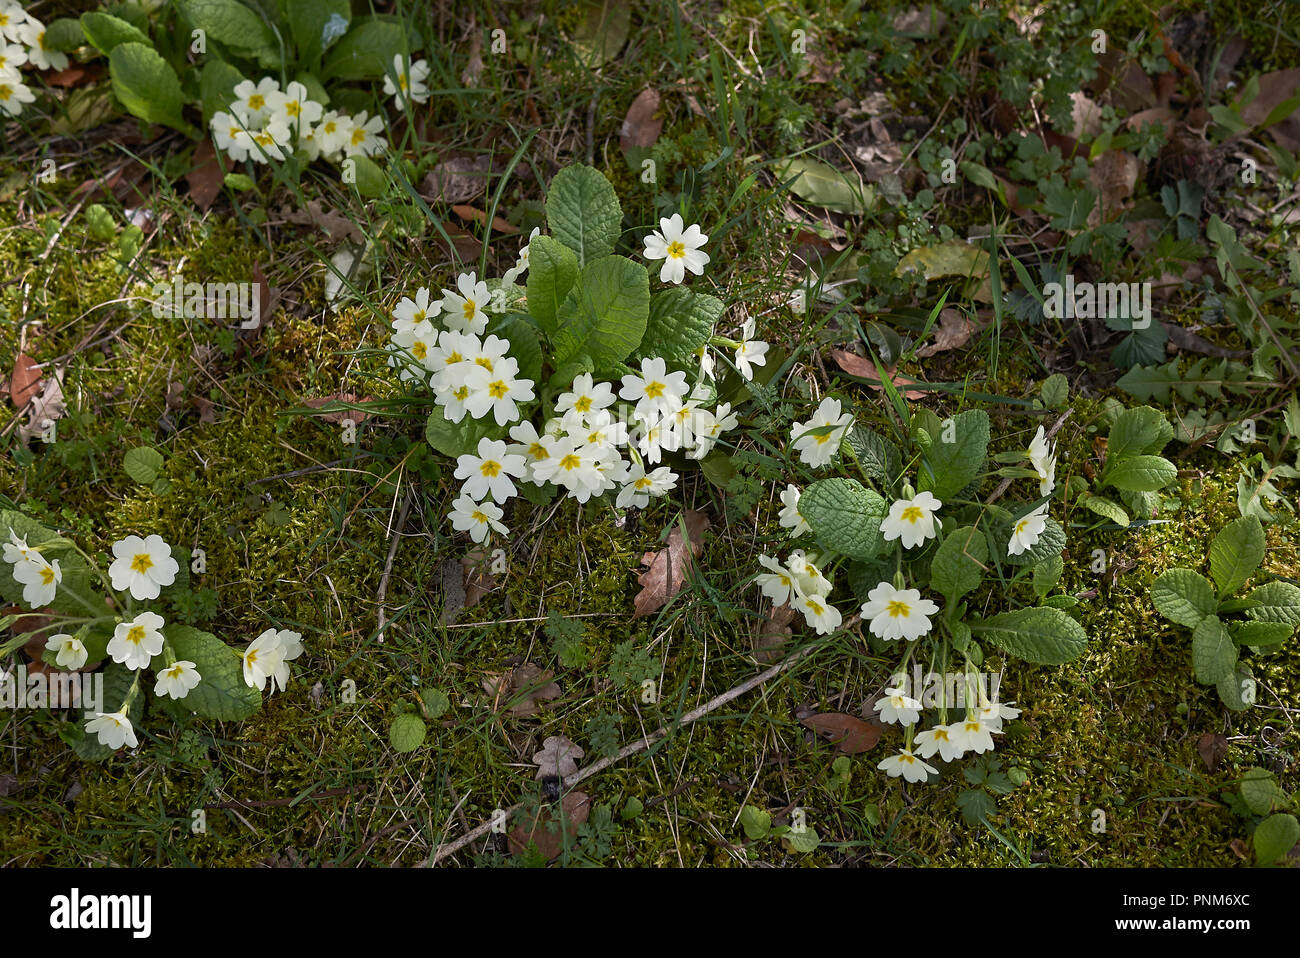 Primula vulgaris with yellow flowers Stock Photo